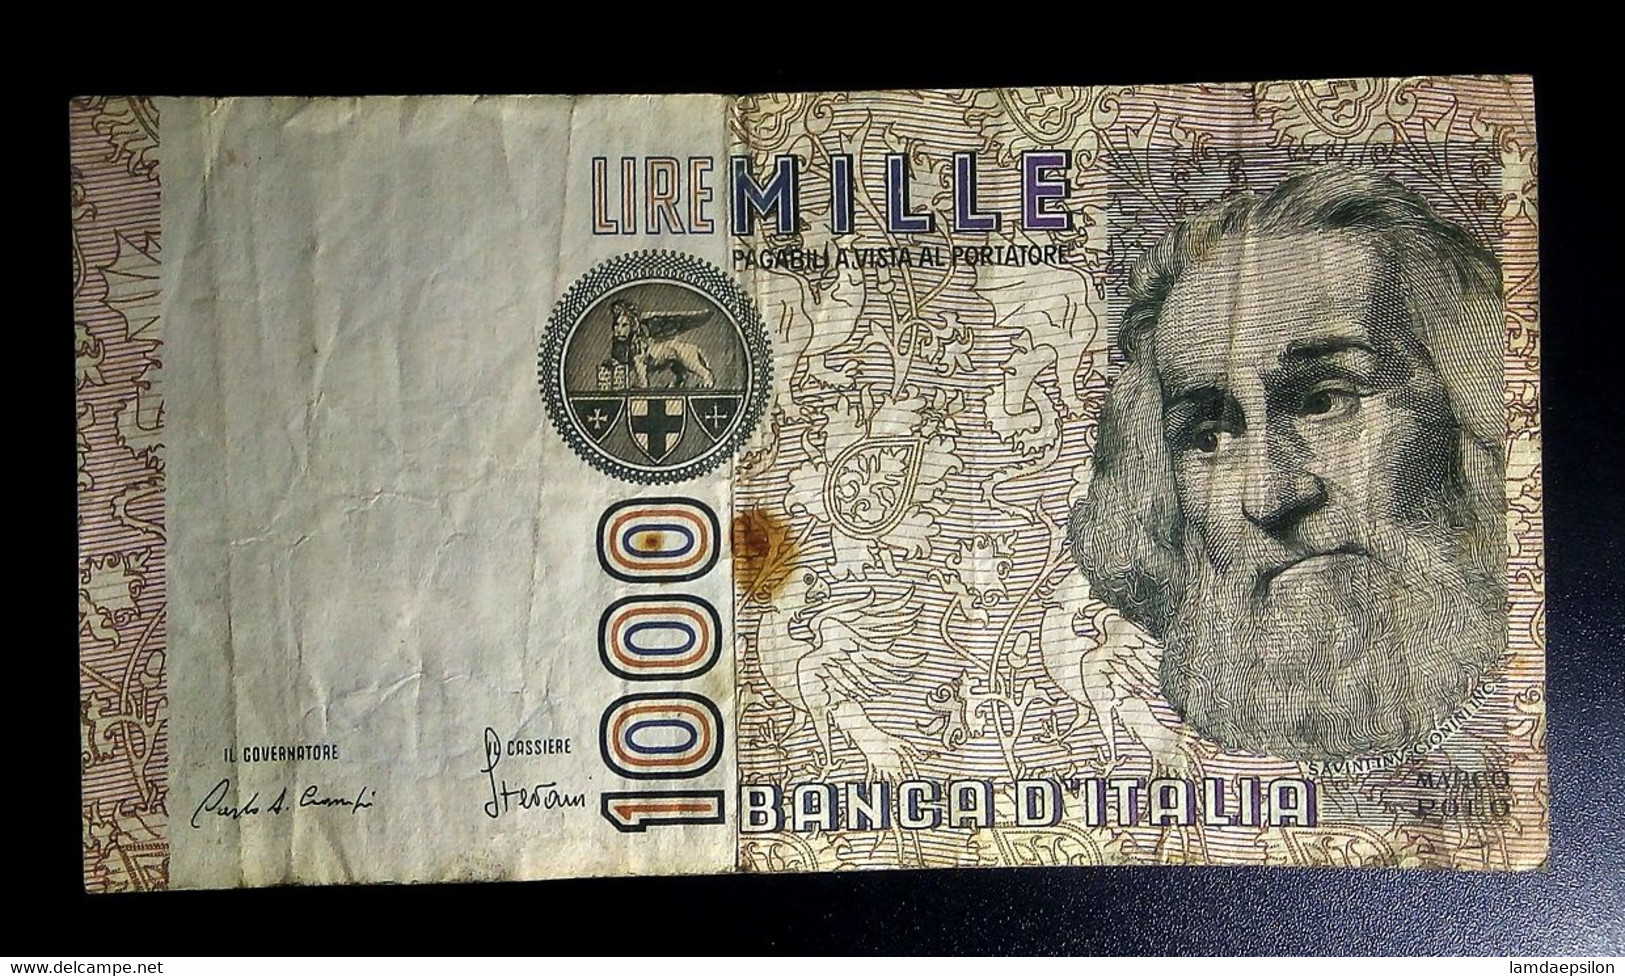 A7  ITALIE   BILLETS DU MONDE   ITALIA  BANKNOTES  1000  LIRE 1982 - [ 9] Verzamelingen